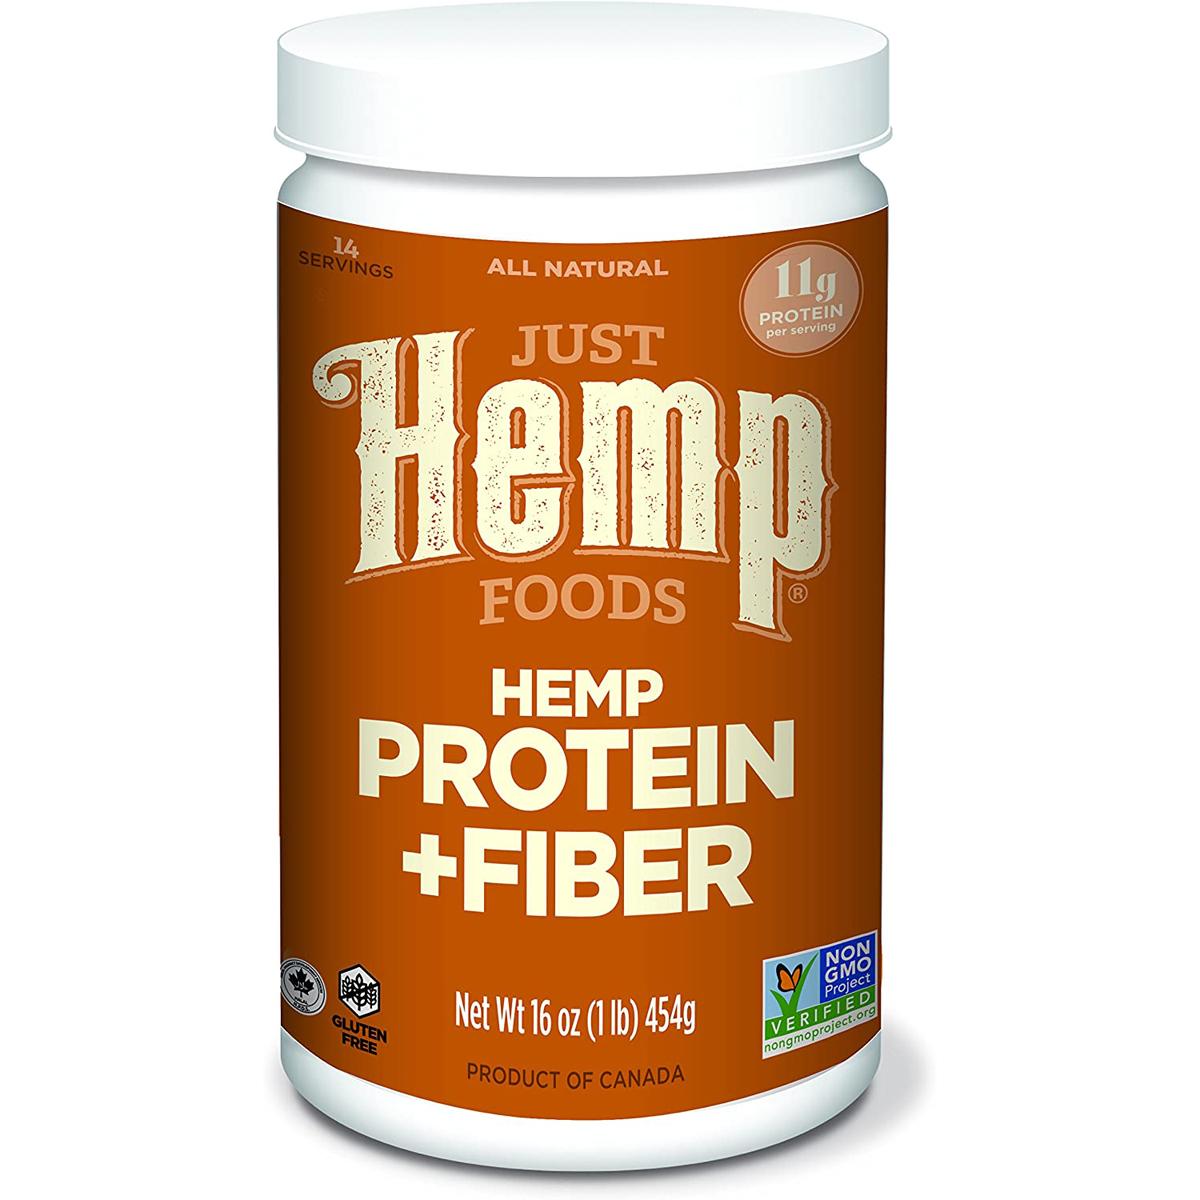 Just Hemp Foods Hemp Protein Powder Plus Fiber for $1.94 Shipped